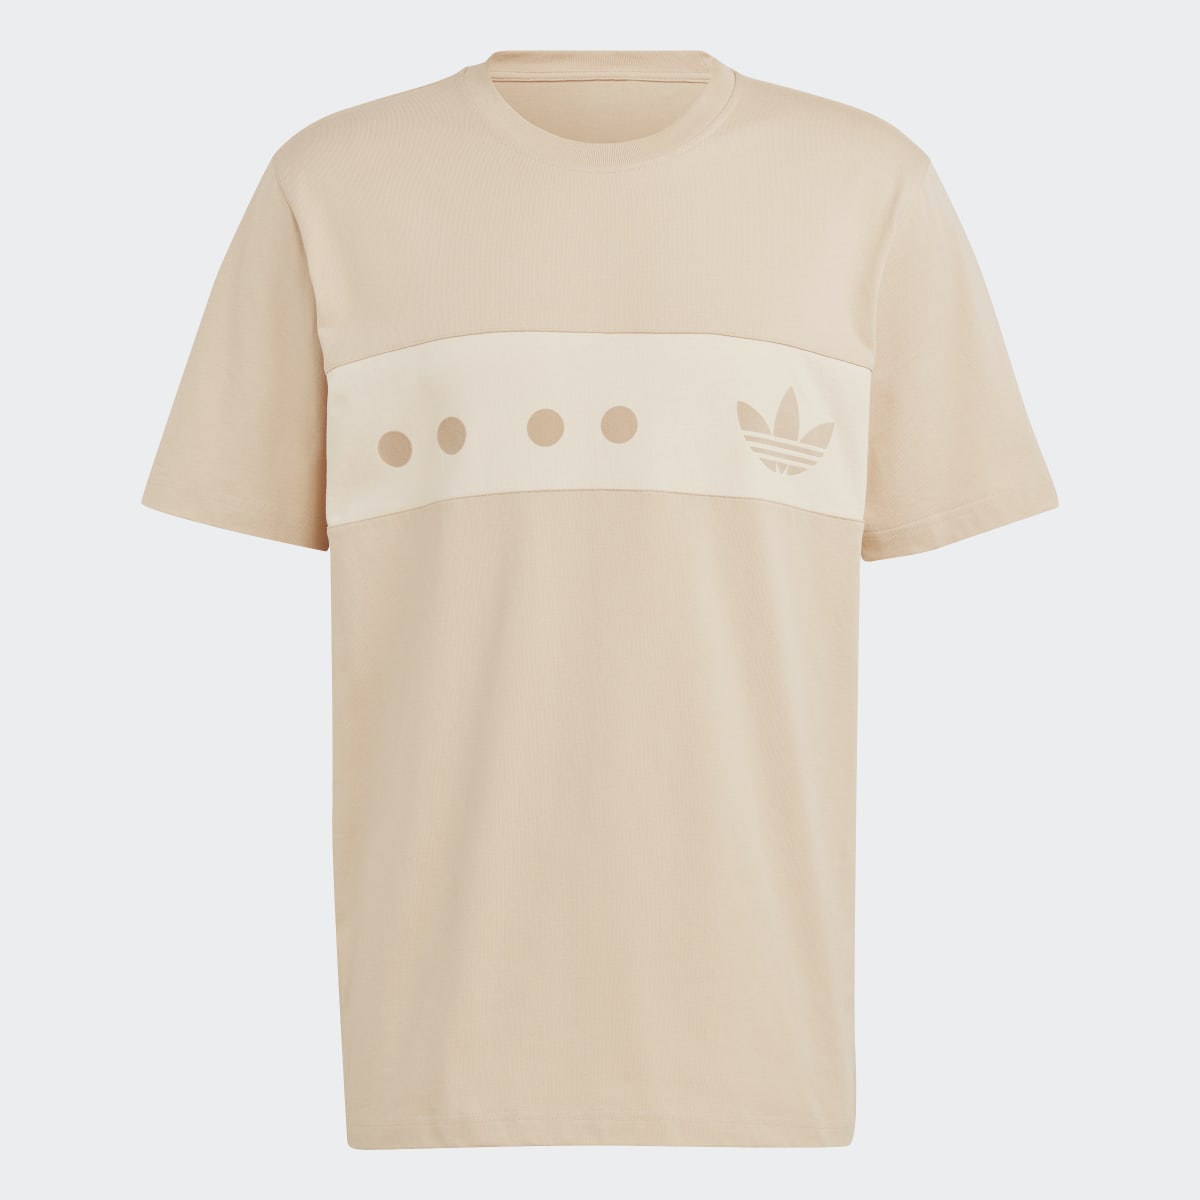 Adidas T-shirt RIFTA City Boy. 6